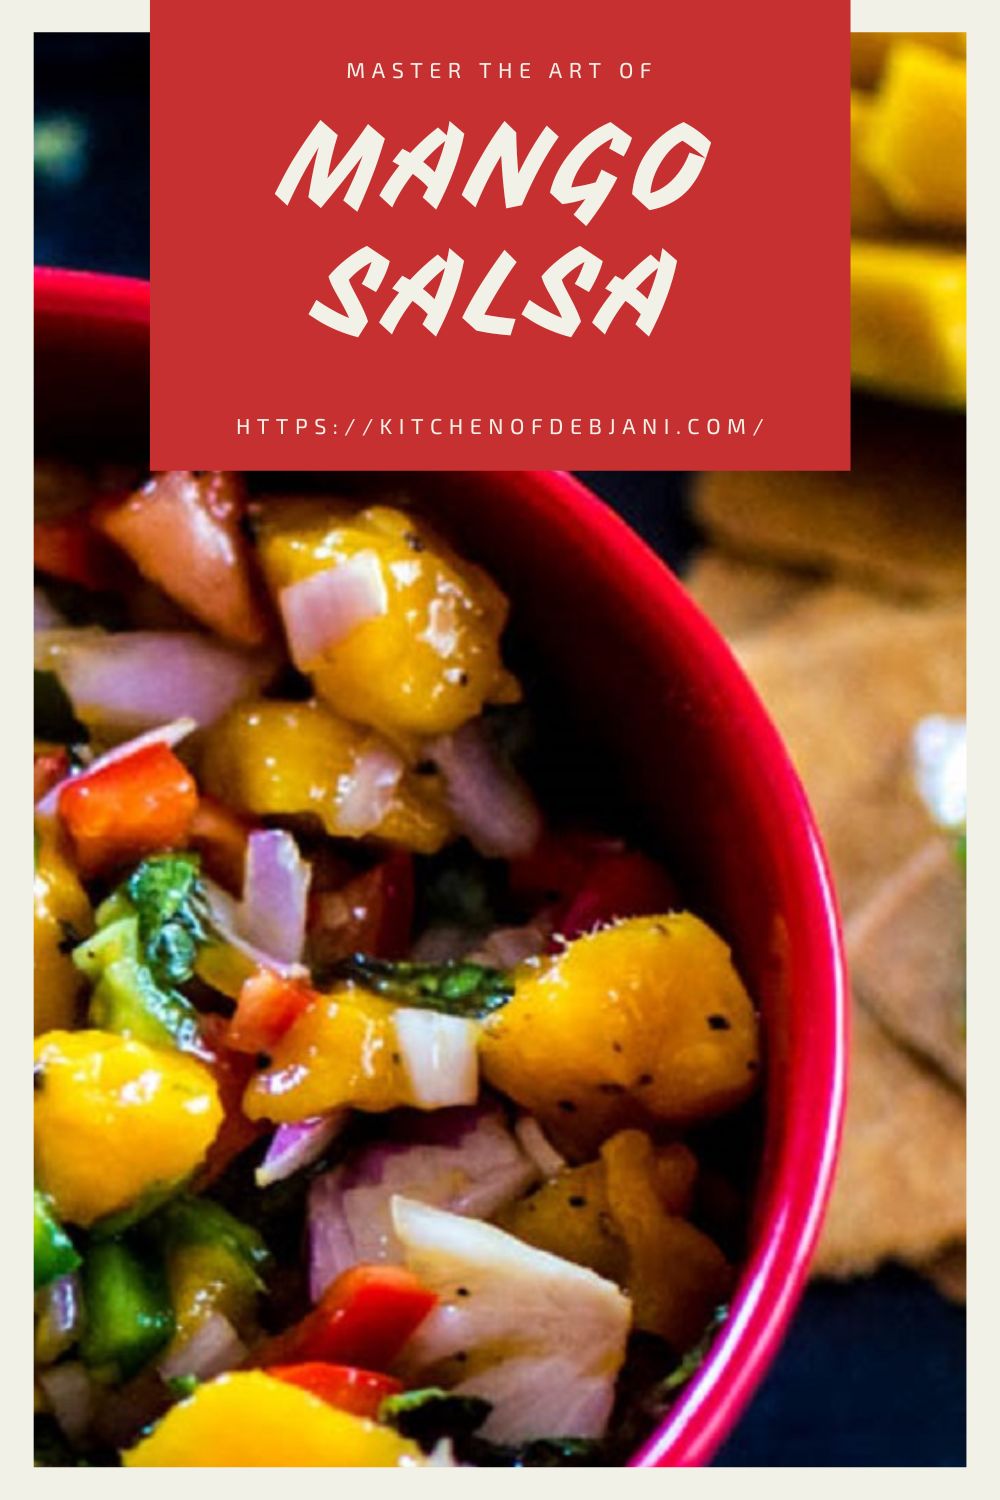 %Mango Salsa Photo Food Pinterest Pin